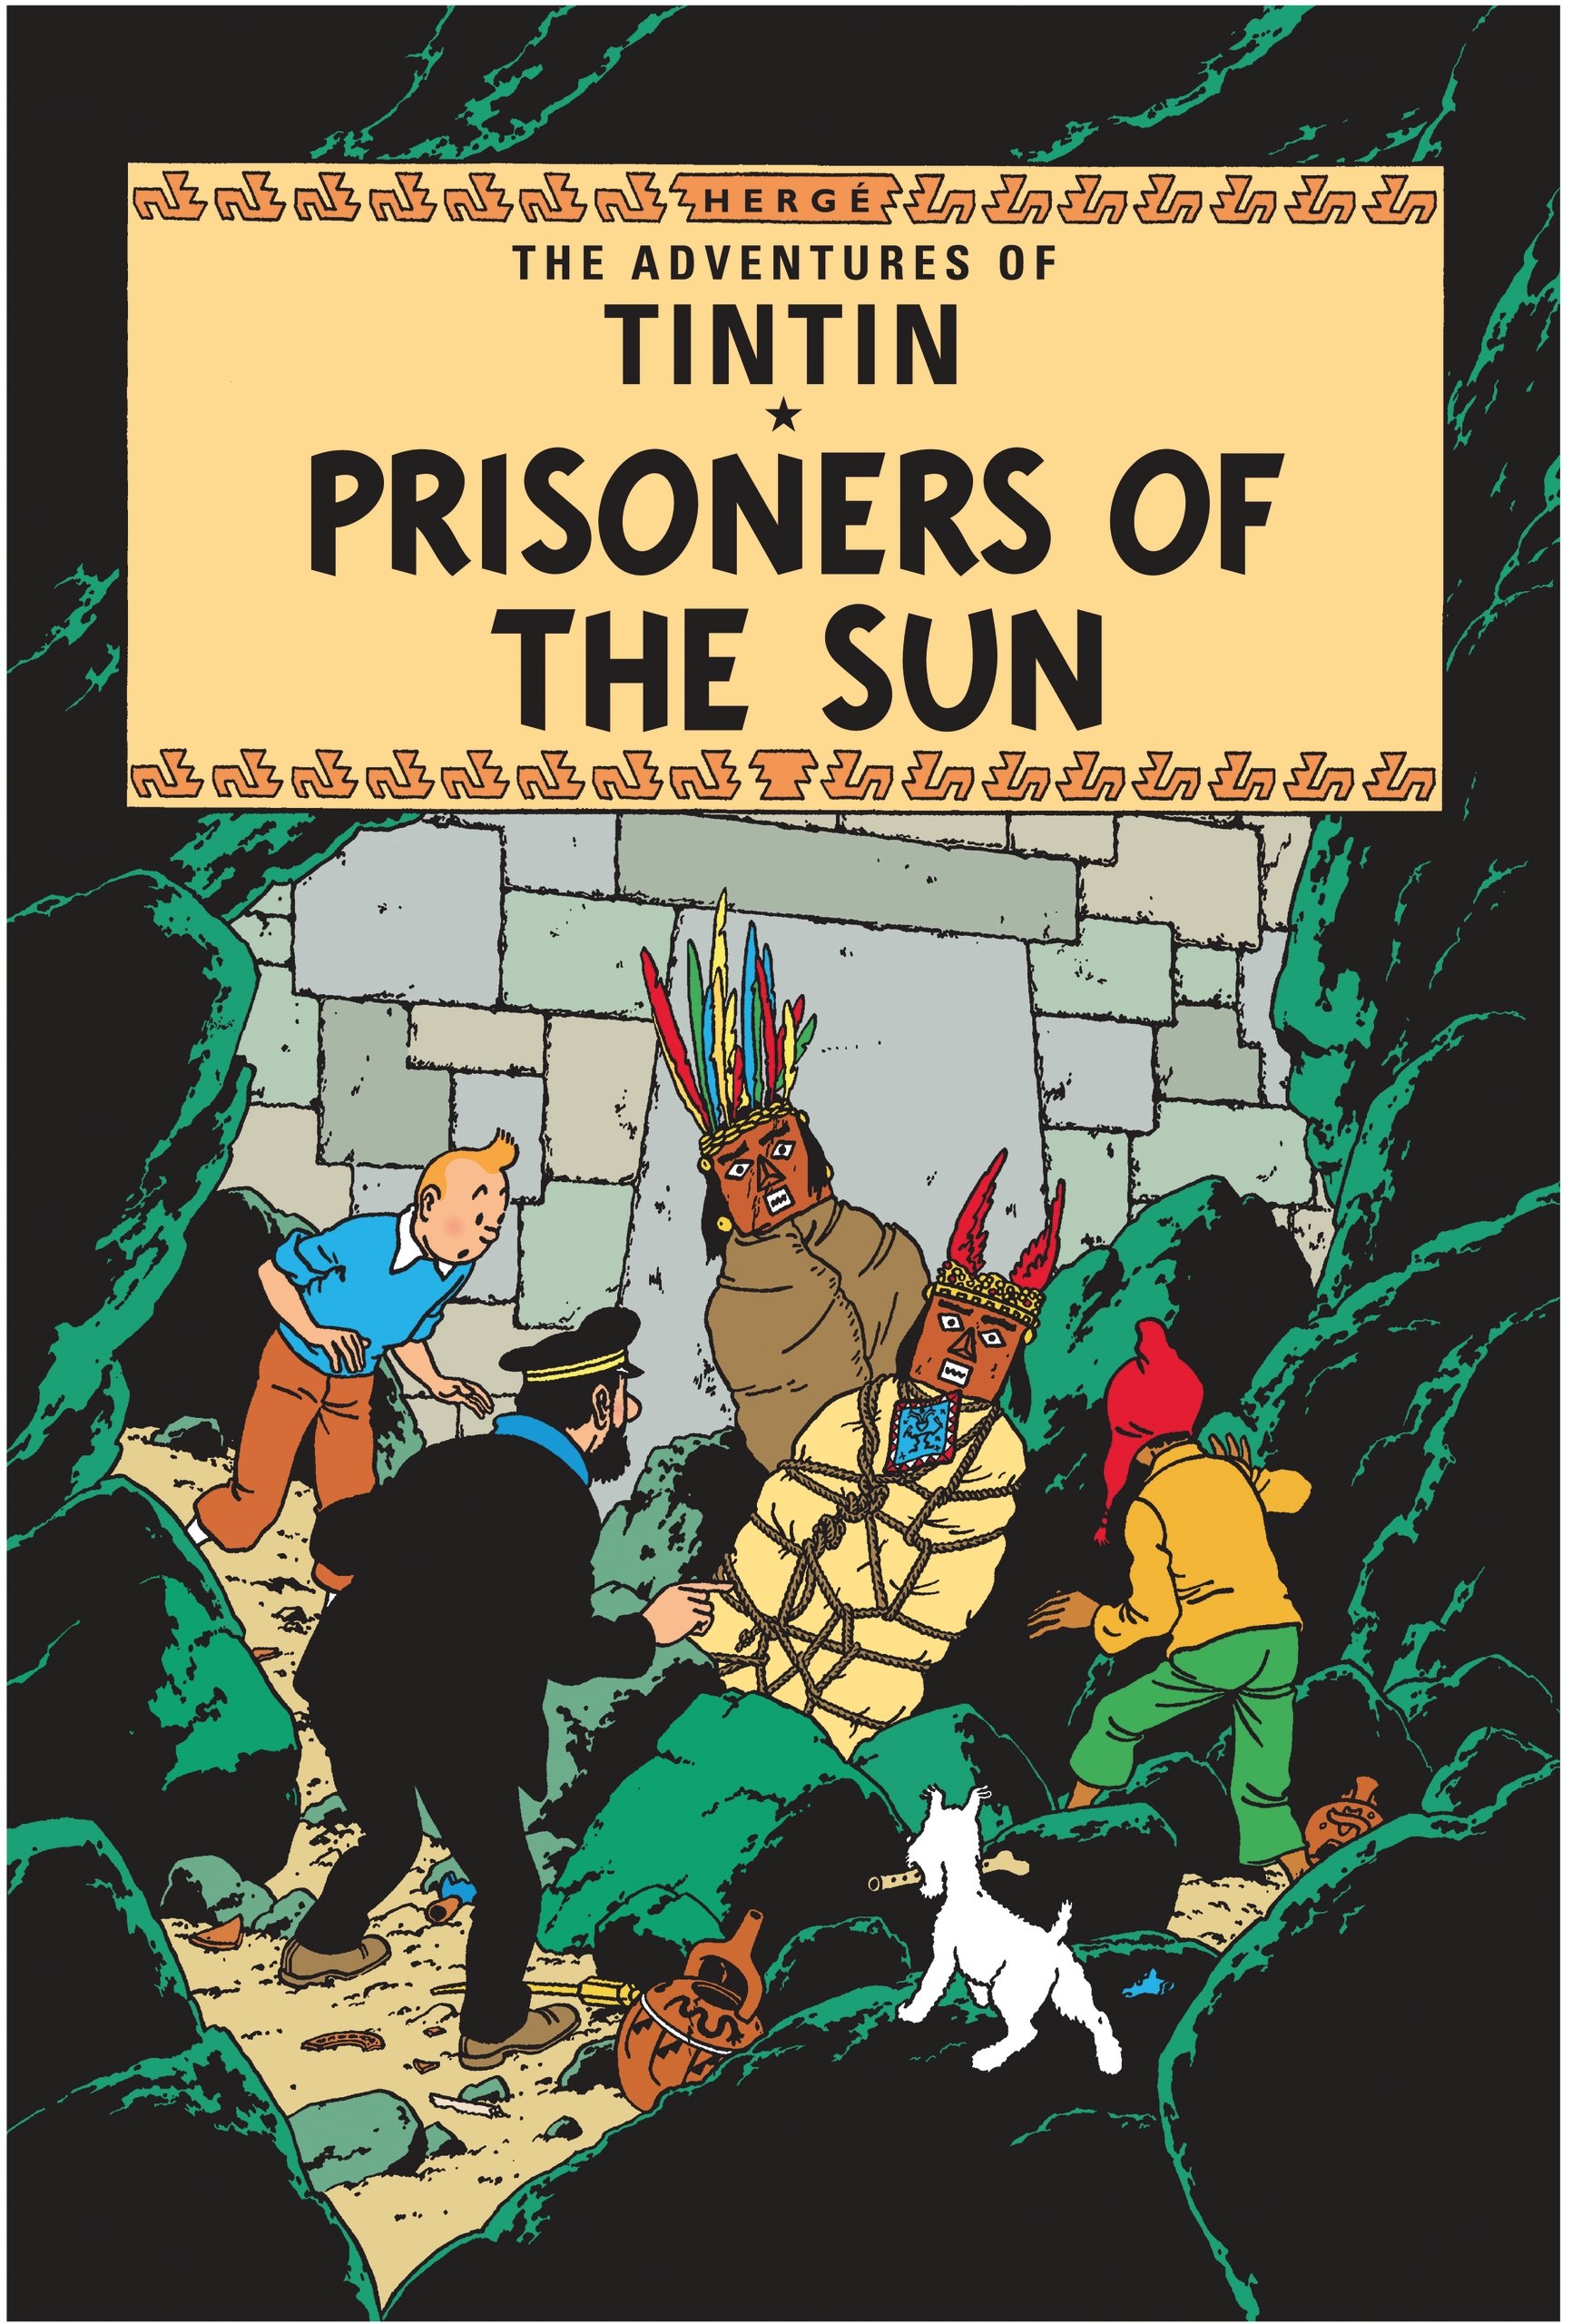 Tintin Prisoners of the Sun